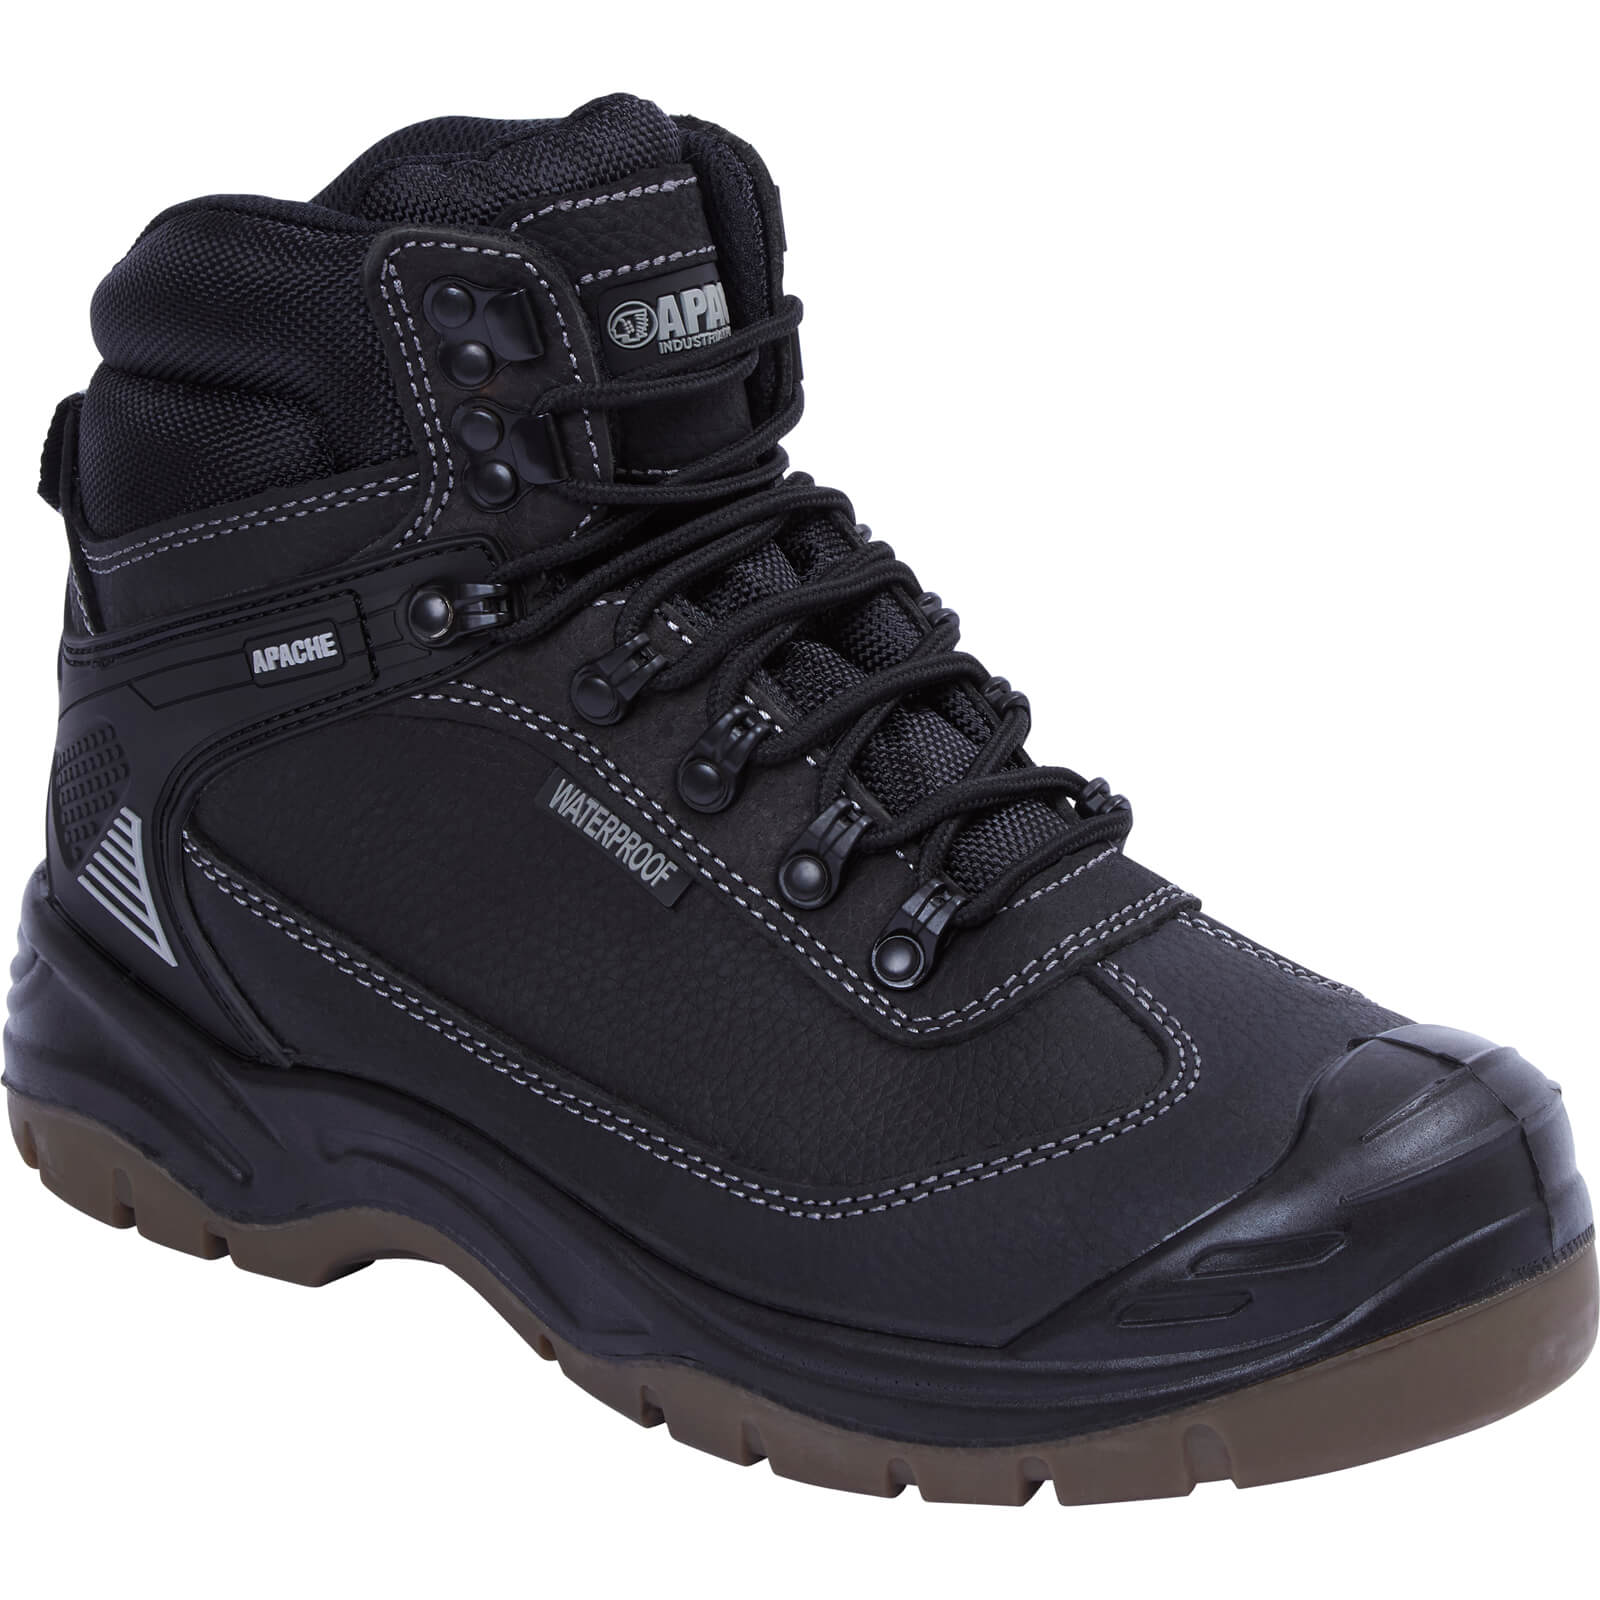 Apache RANGER Waterproof Safety Hiker Boots Black Size 10